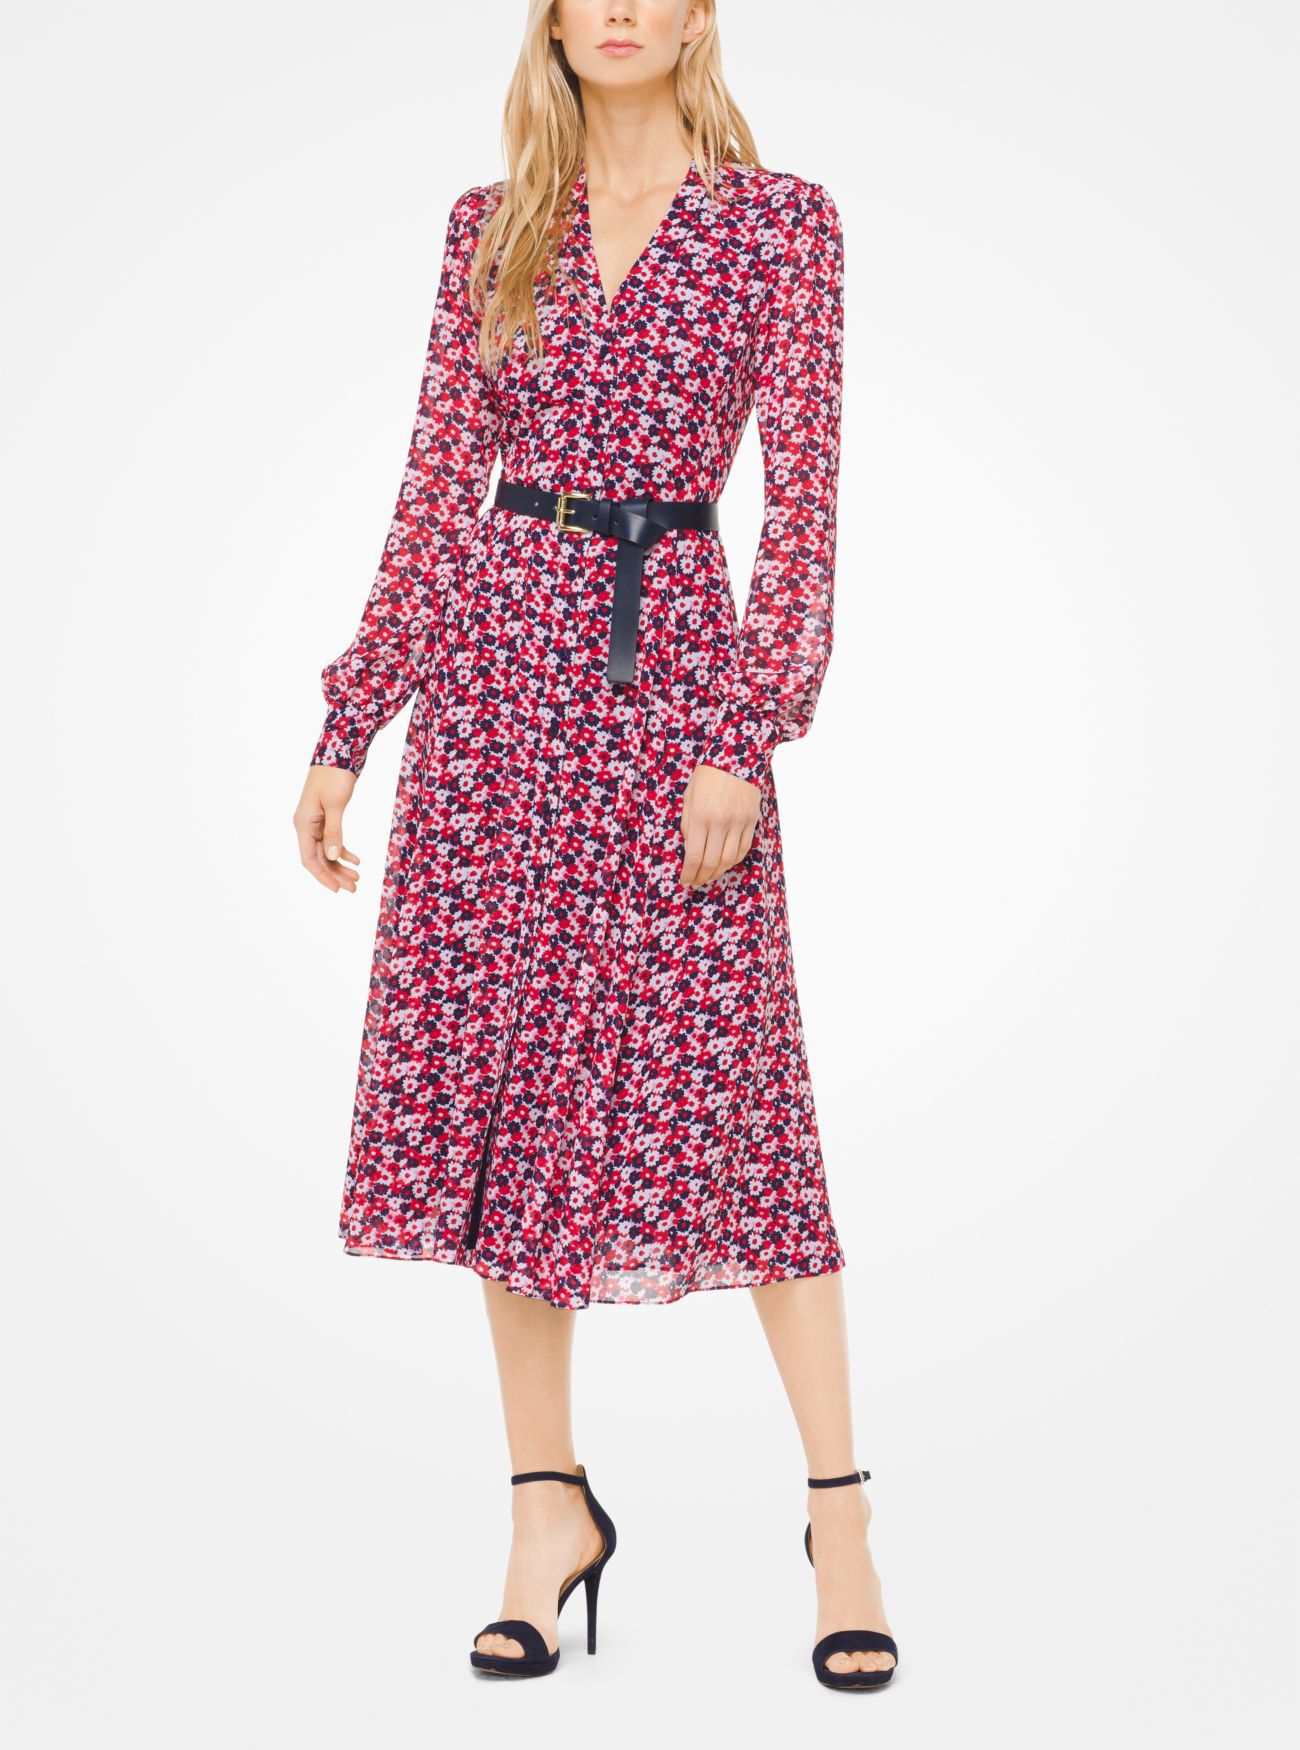 MICHAEL KOR SEMI ANNUAL SALE WOMEN'S CLOTHING STARTING AT $57! dealsaving